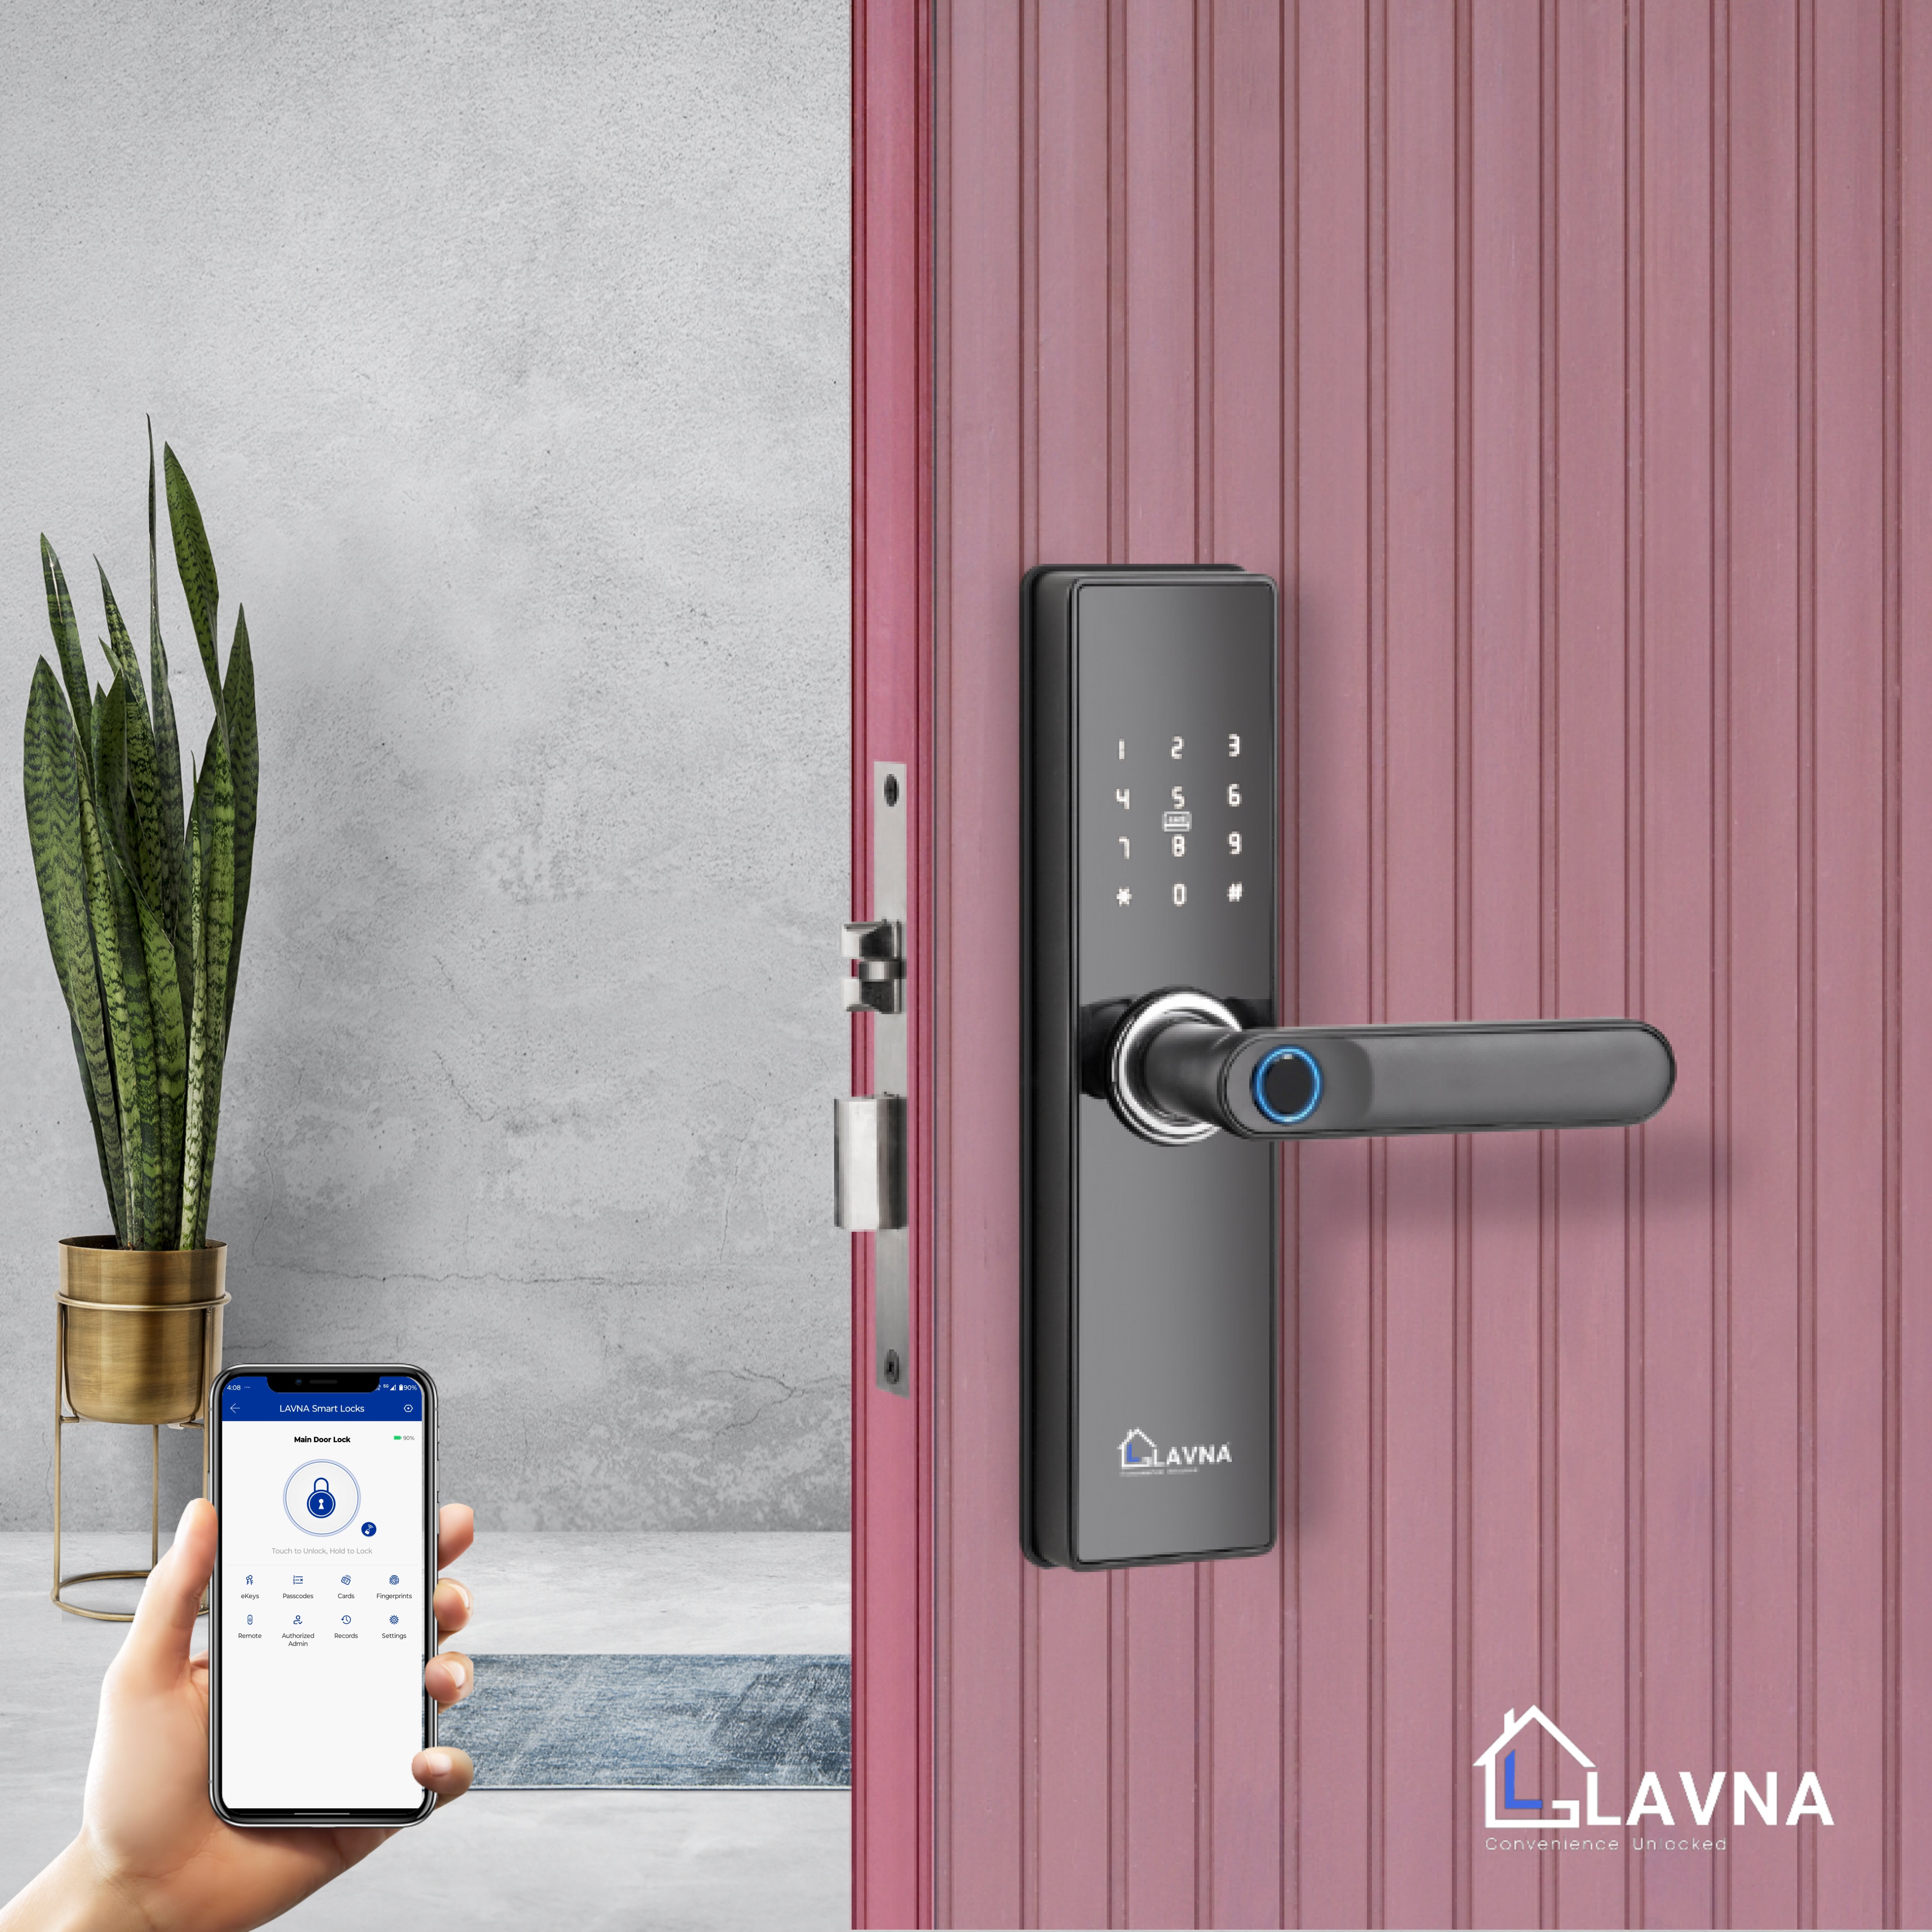 LAVNA LA16 Fingerprint Door Lock with Bluetooth Mobile App, Fingerprint, OTP, PIN, RFID Card and Manual Key 6 way Access for Wooden Doors